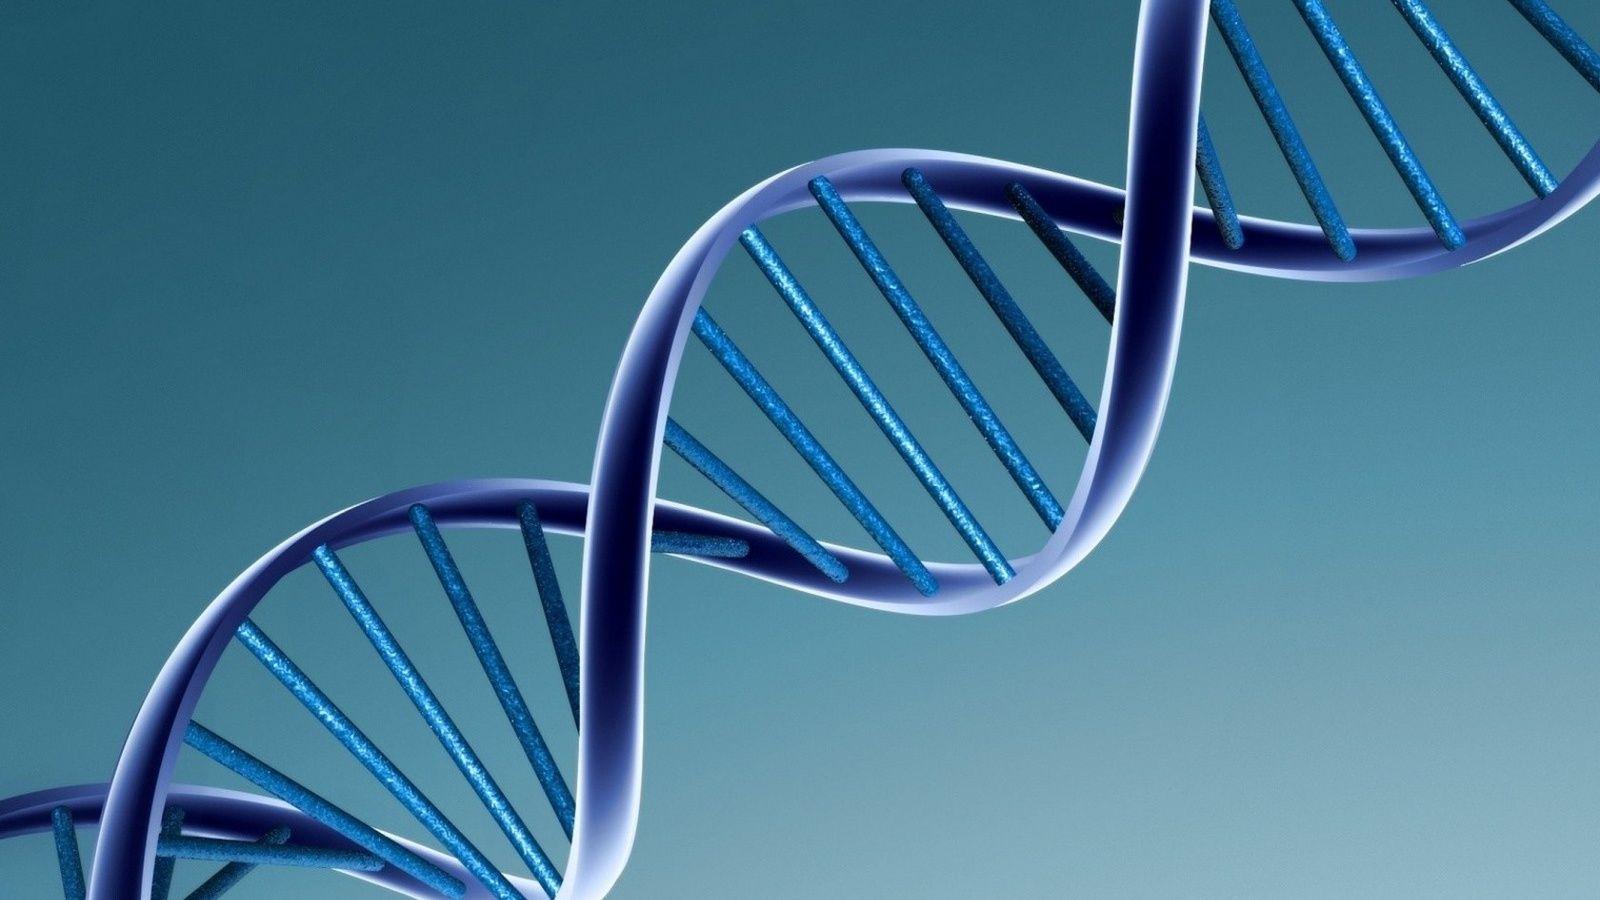 DNA Helix Wallpaper Picture, 6 Dna Helix Wallpaper. Biological